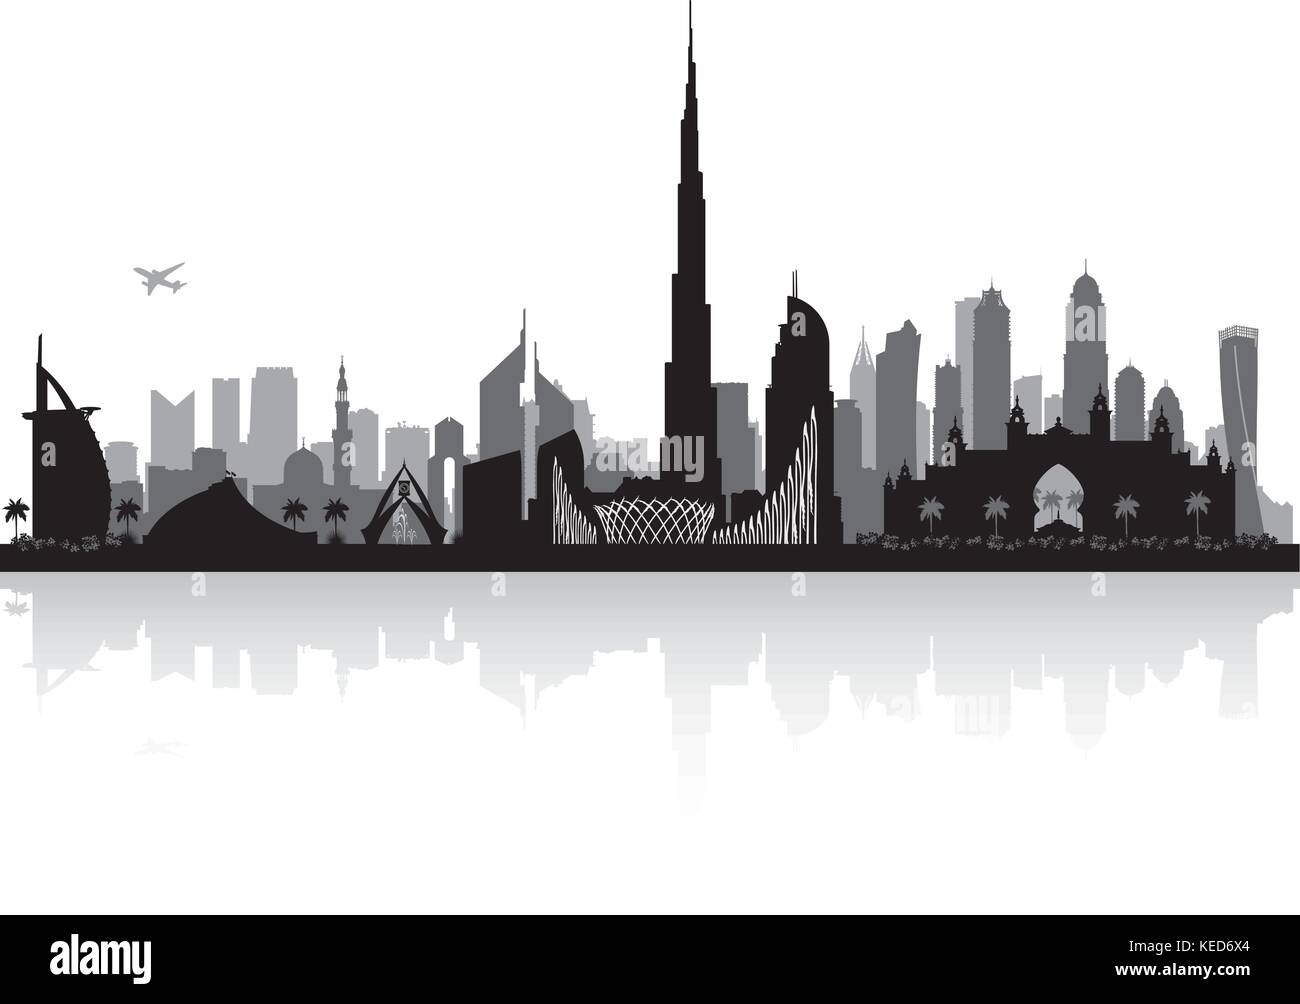 Dubai UAE city skyline vector silhouette illustration Stock Vector